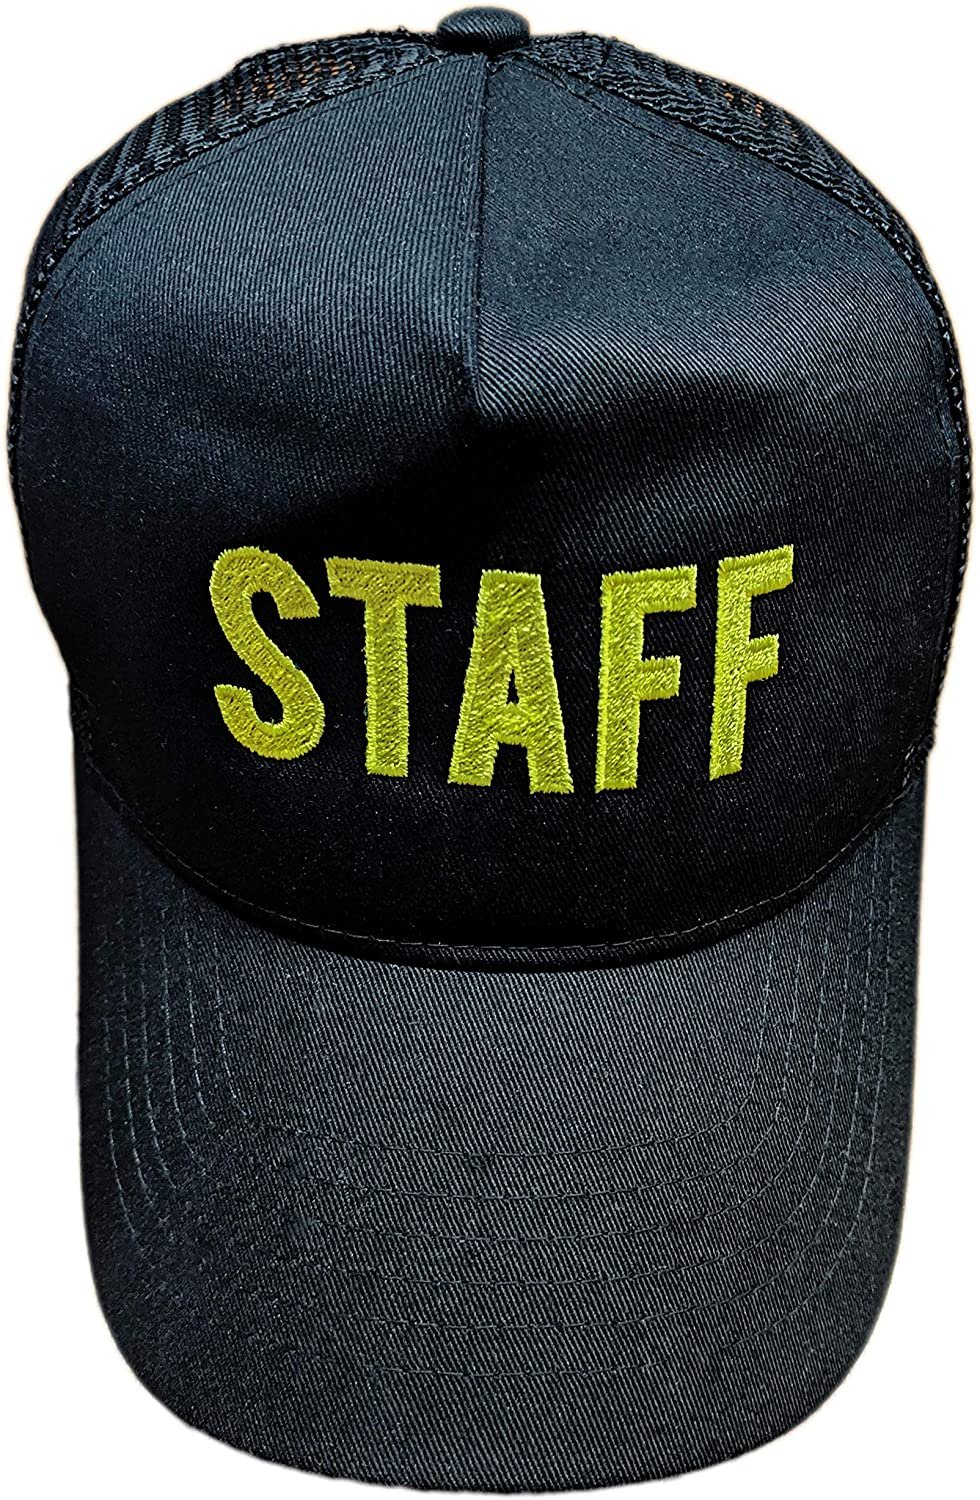 Staff Baseball Hat Embroidered Mesh Trucker Cap (Black & Neon)